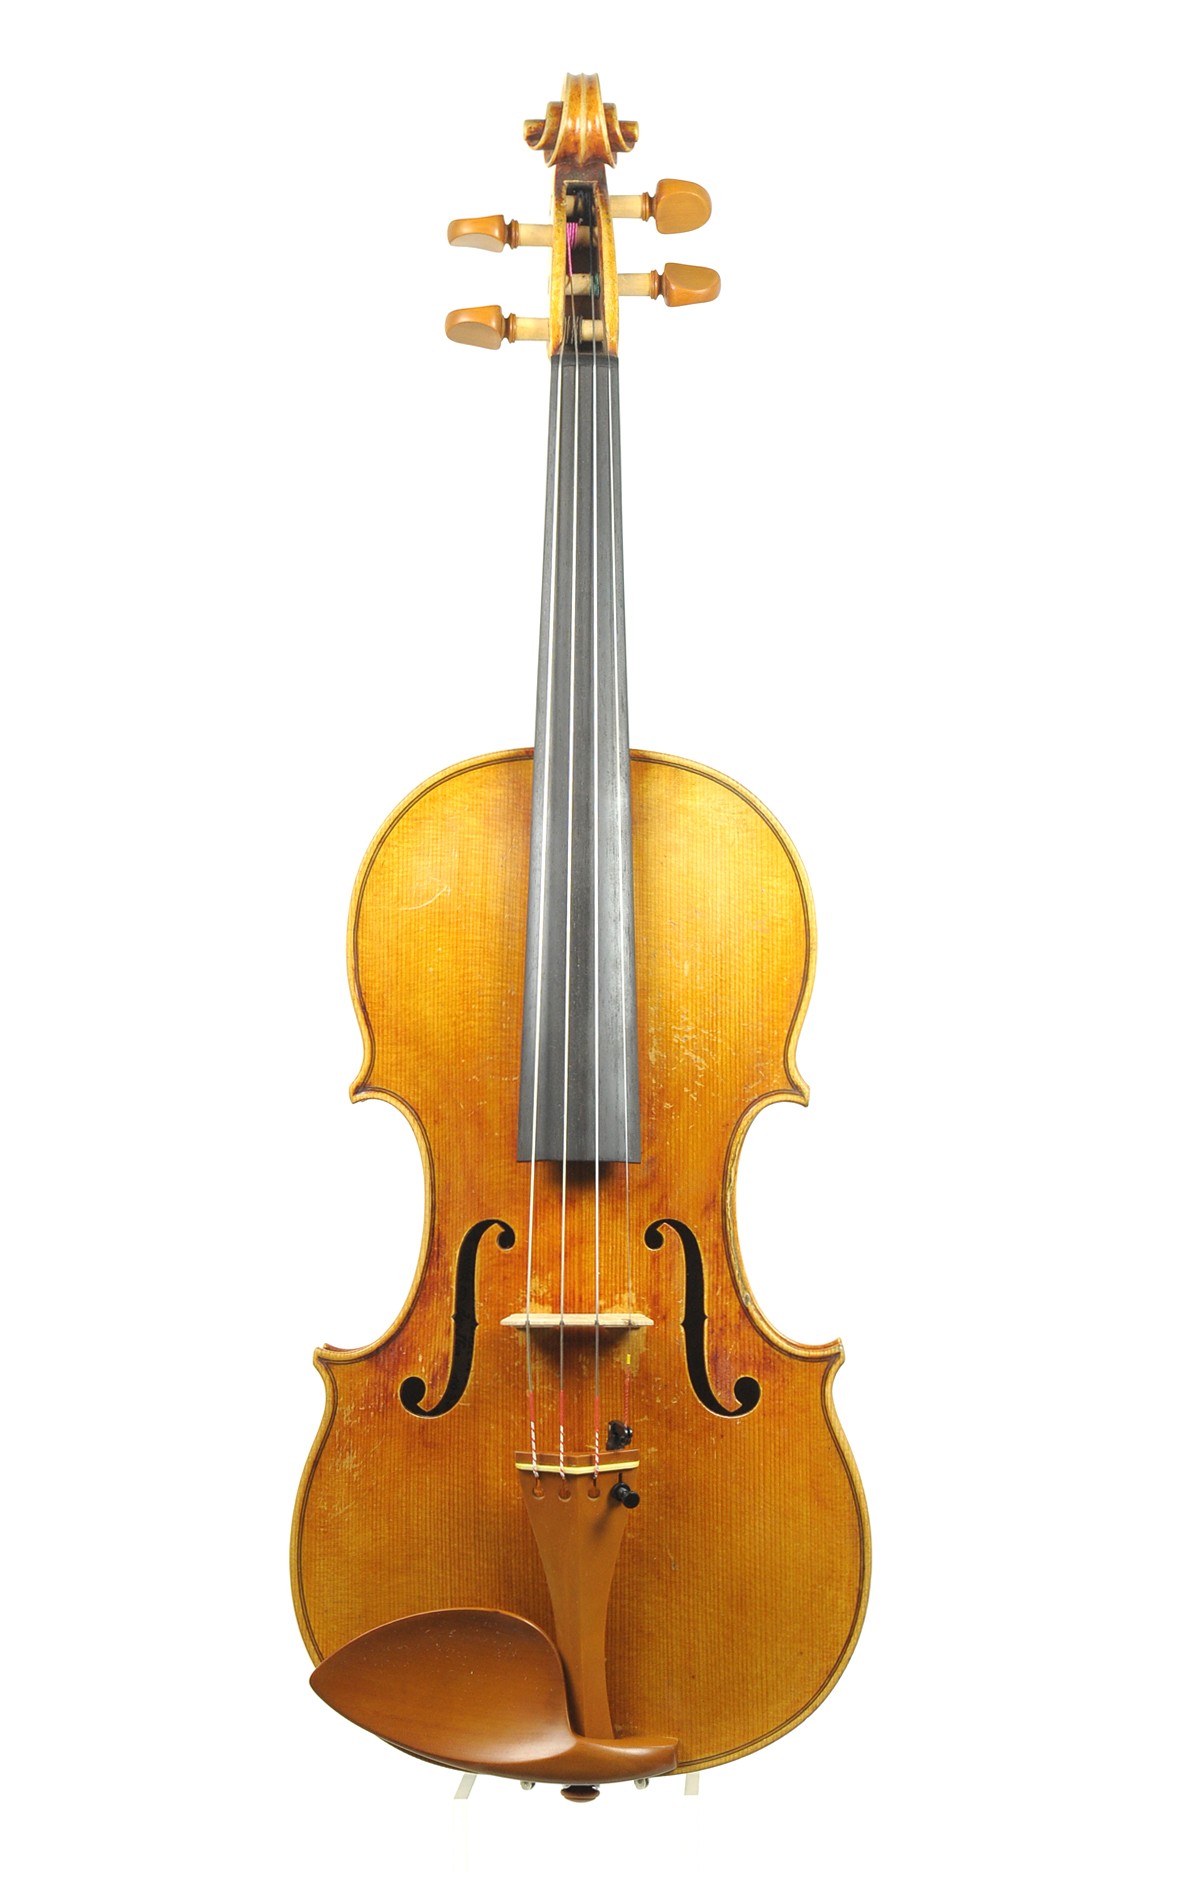 Michael Reindl, petite Mittenwald 7/8 master violin, 1935 - top